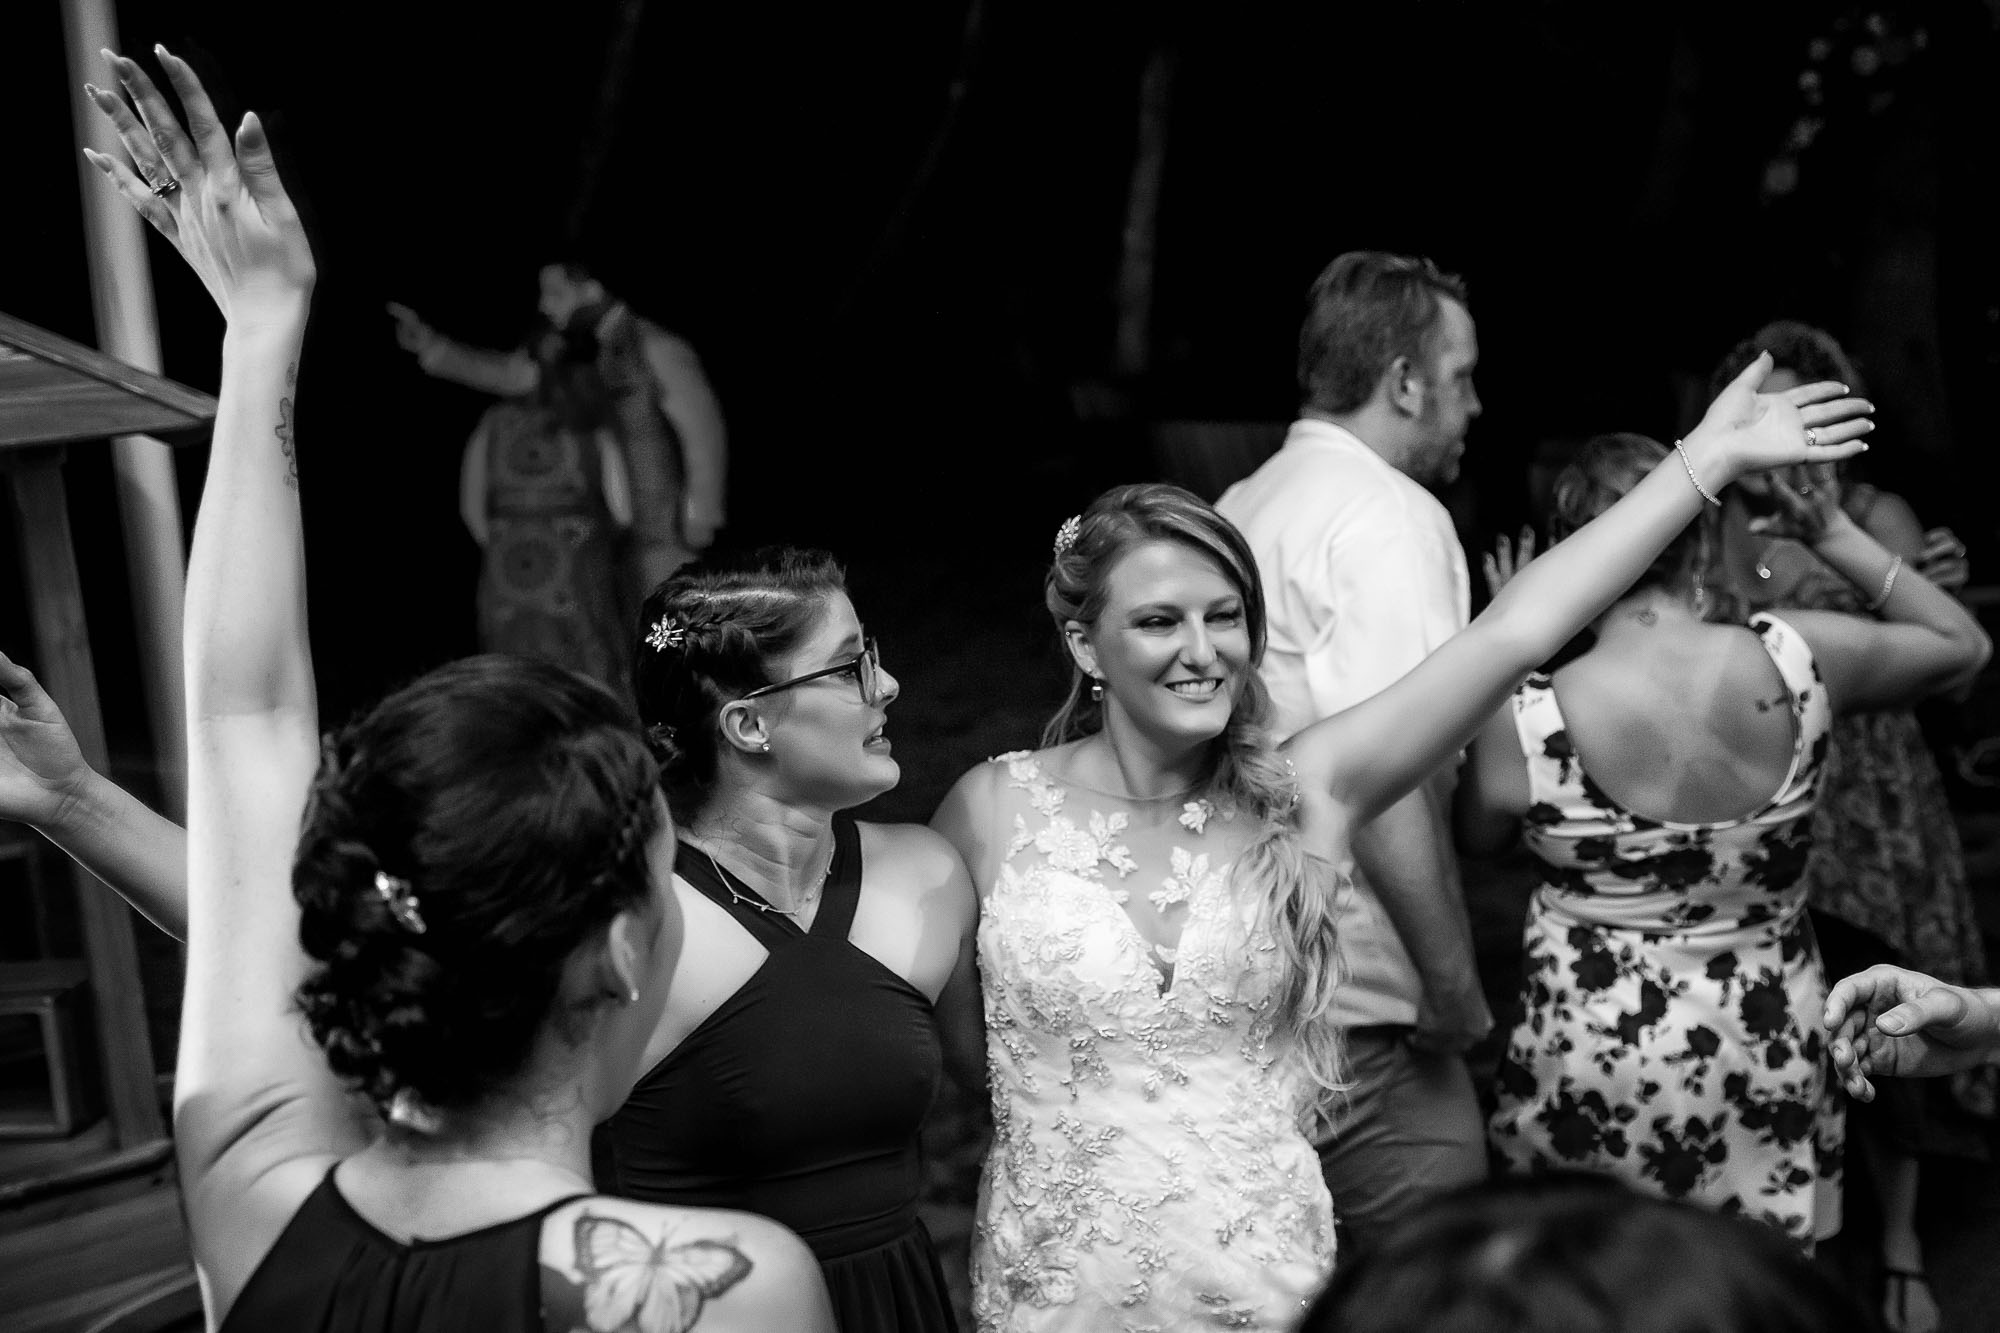 Dancing at the beach wedding reception